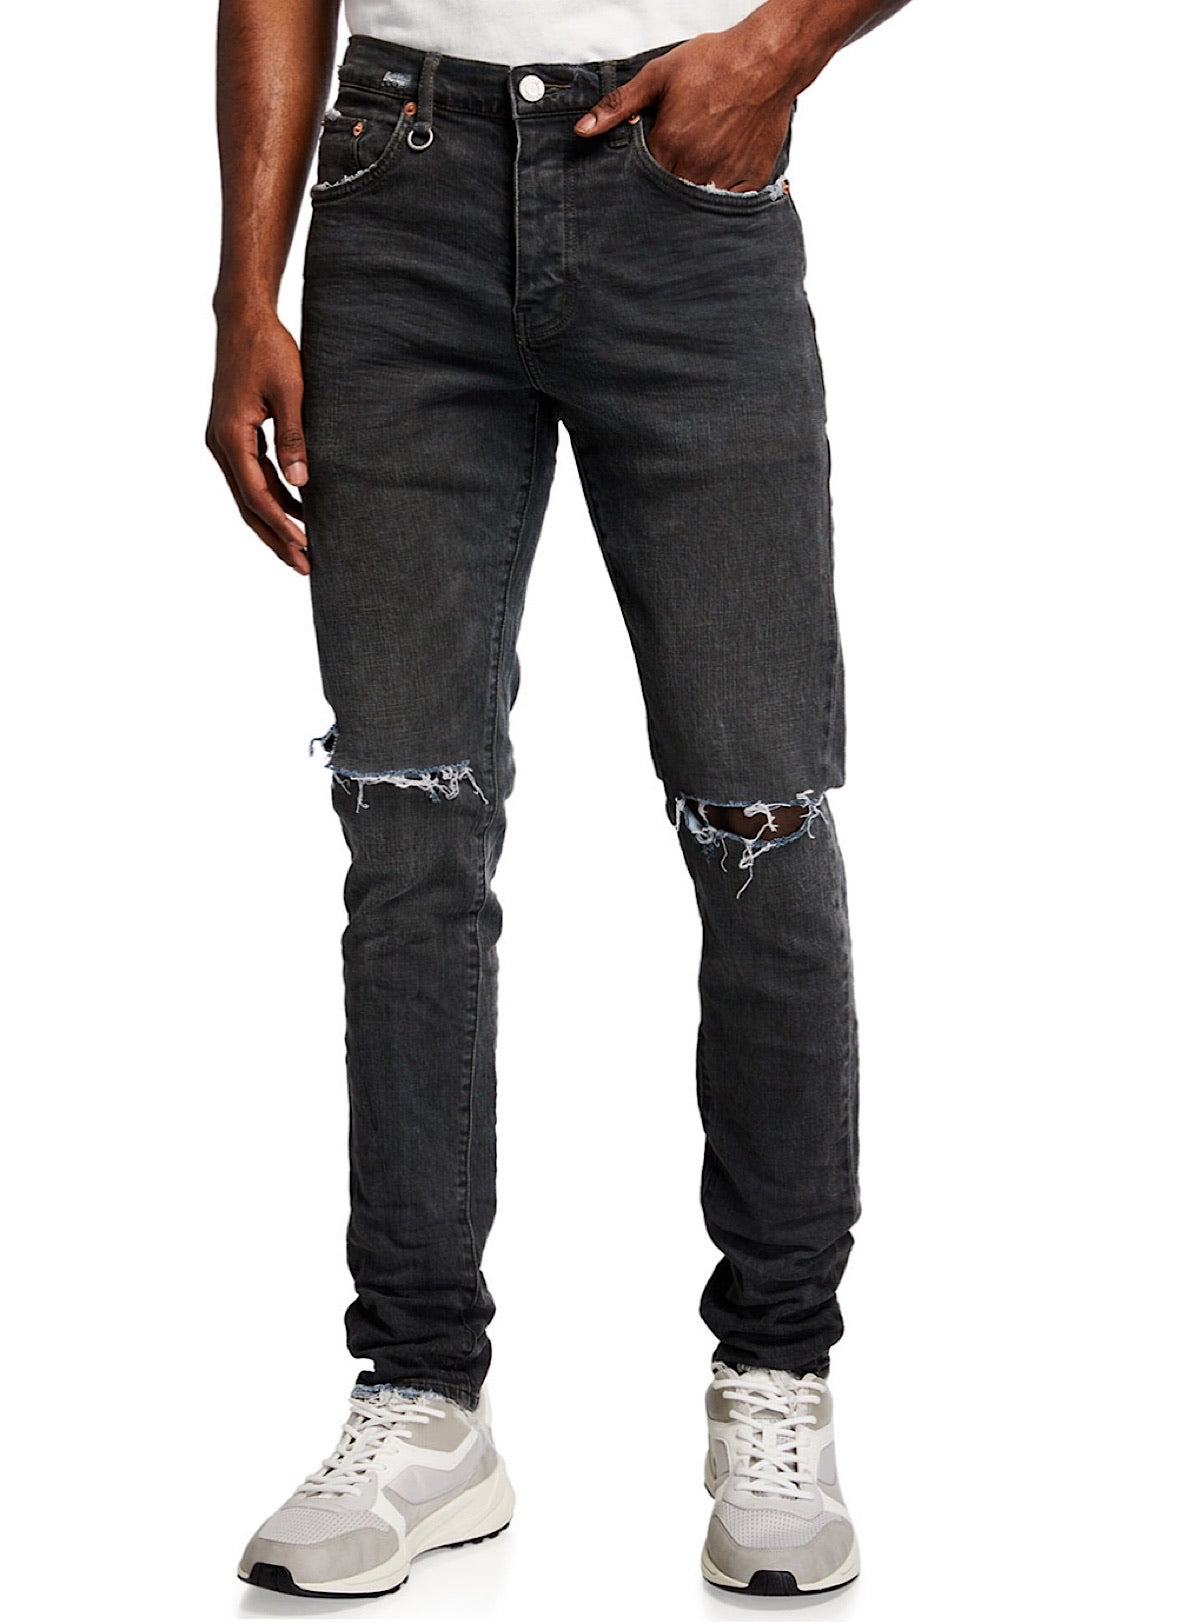 PURPLE BRAND Gray Knee Slit Skinny Jeans - Worn Gray Knee Slit